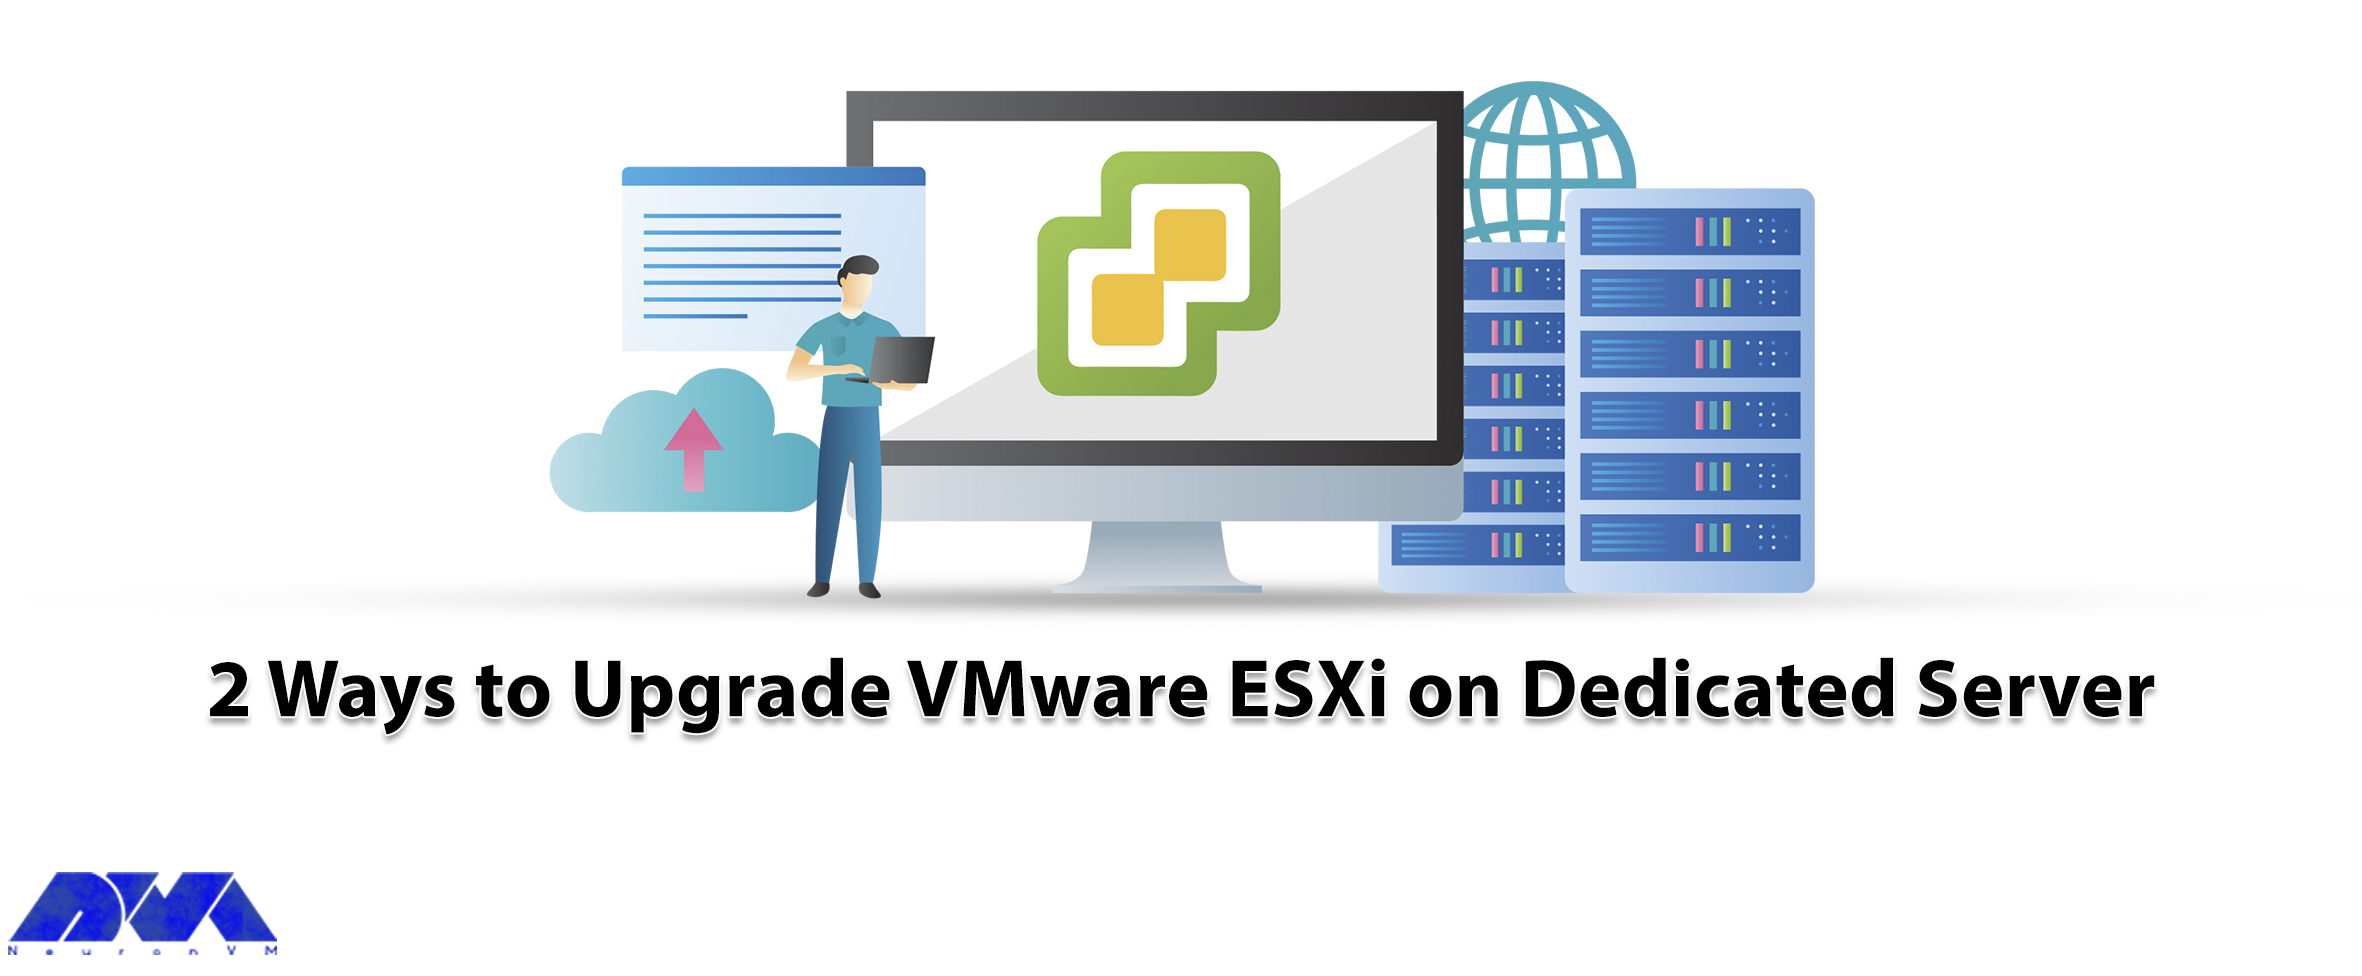 2 Ways to Upgrade VMware ESXi on Dedicated Server - NeuronVM